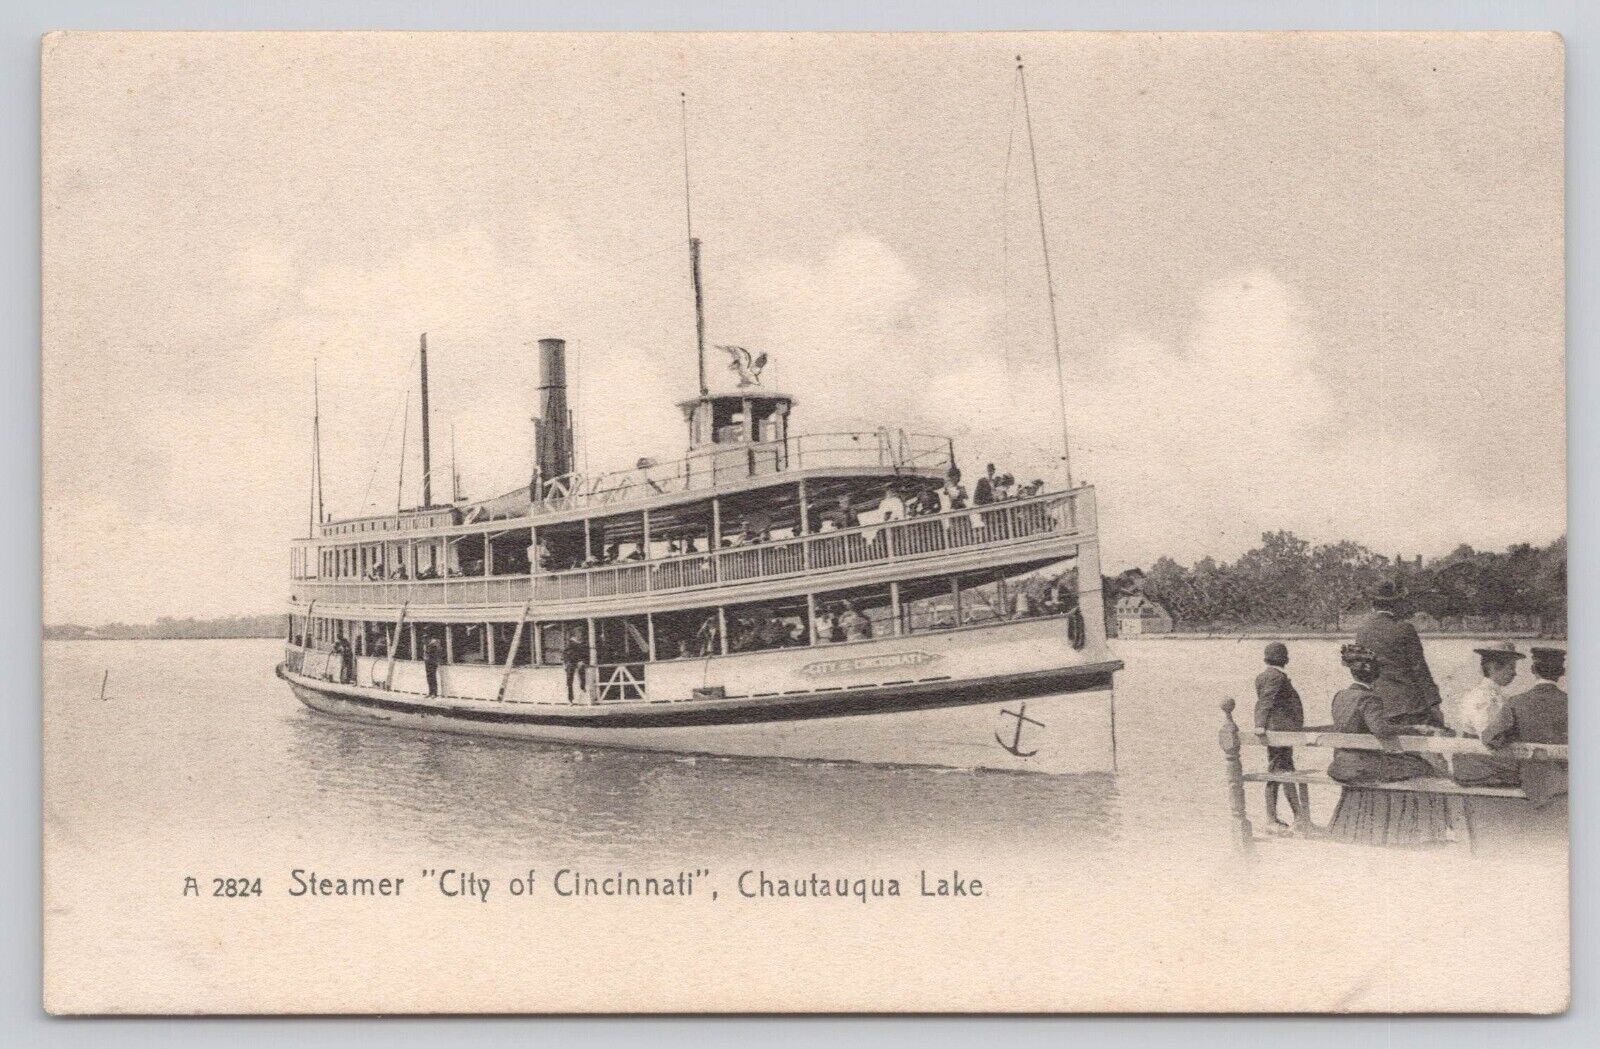 c 1905 Chautauqua Lake, City of Cincinnati Steamer Antique Photo Postcard